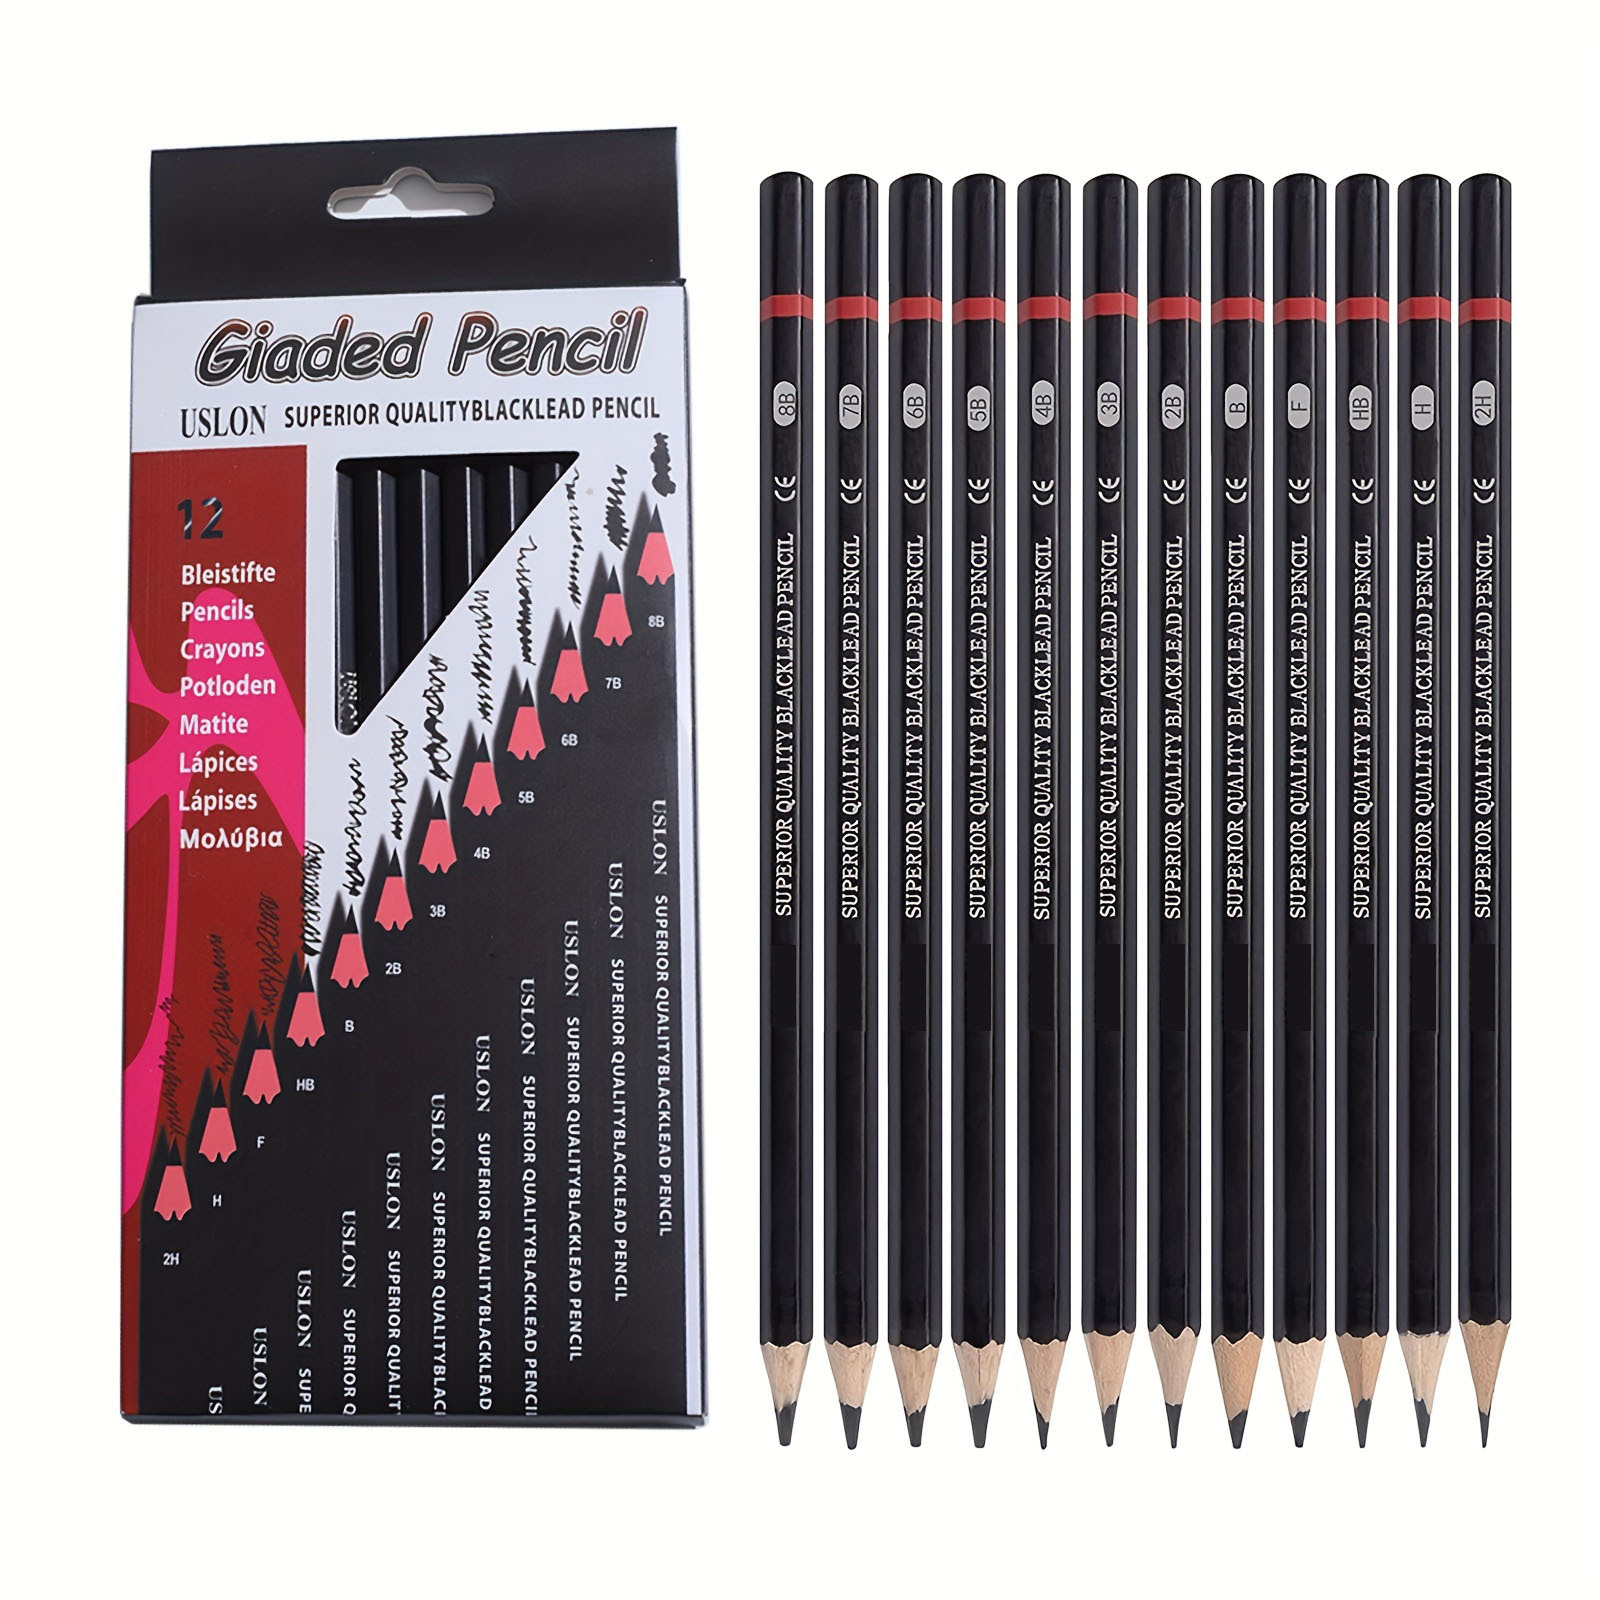 4B Drawing Pencils - Ujan Creations